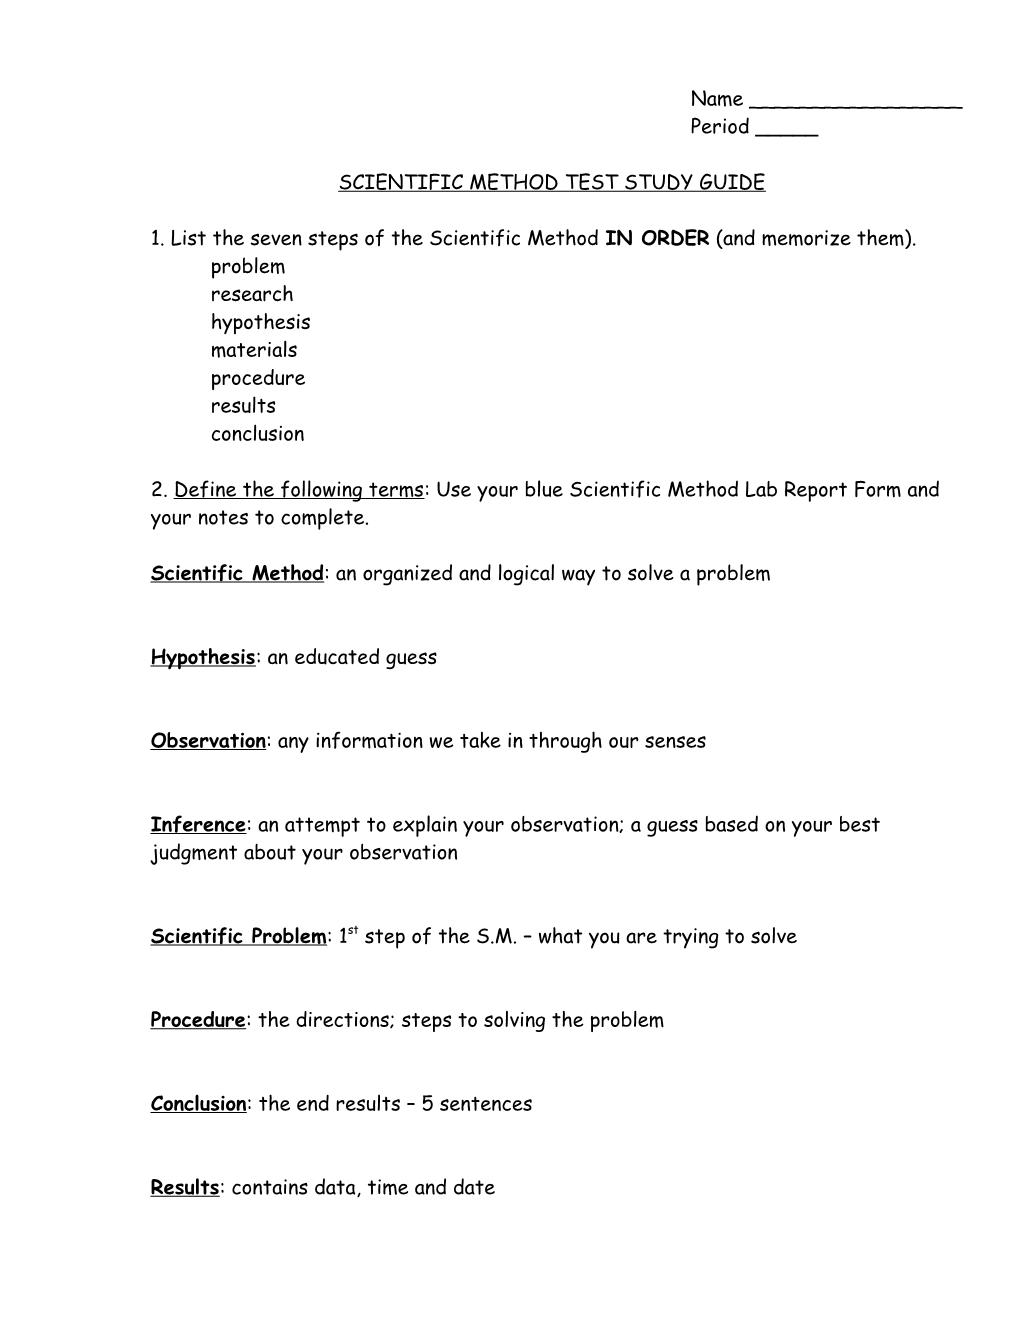 Scientific Method Test Study Guide